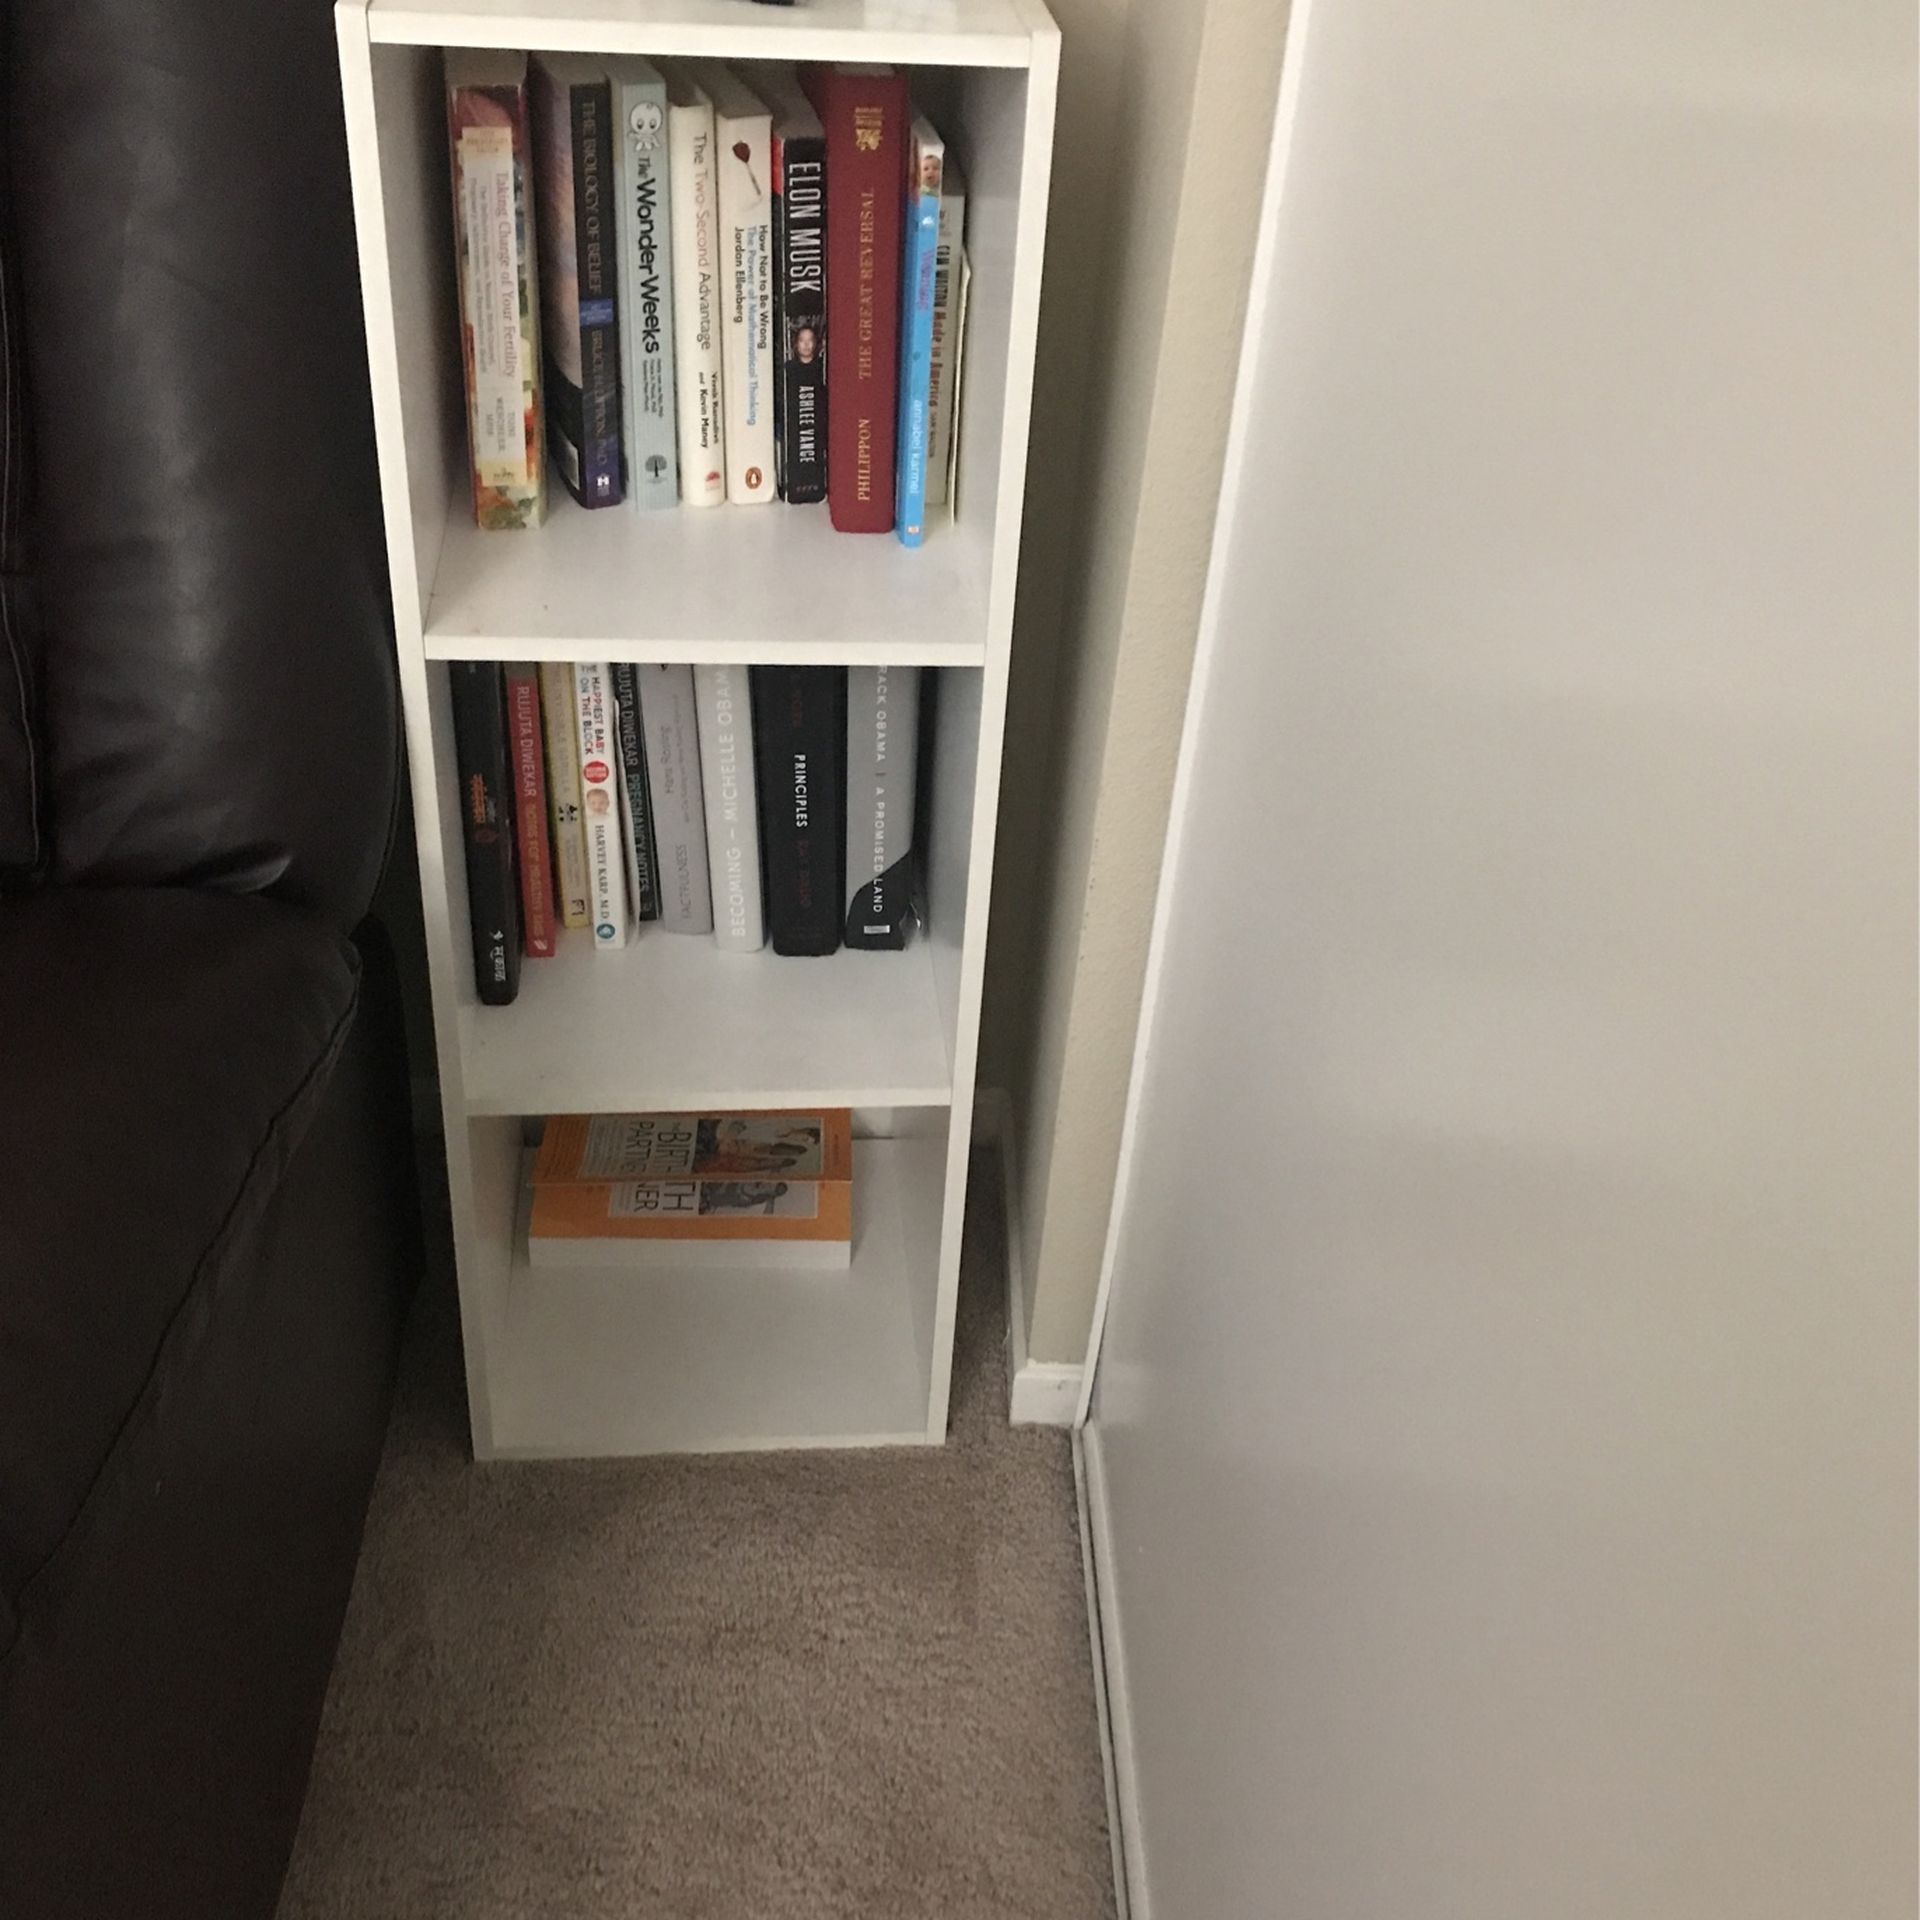 Book Shelf organizer From Ikea